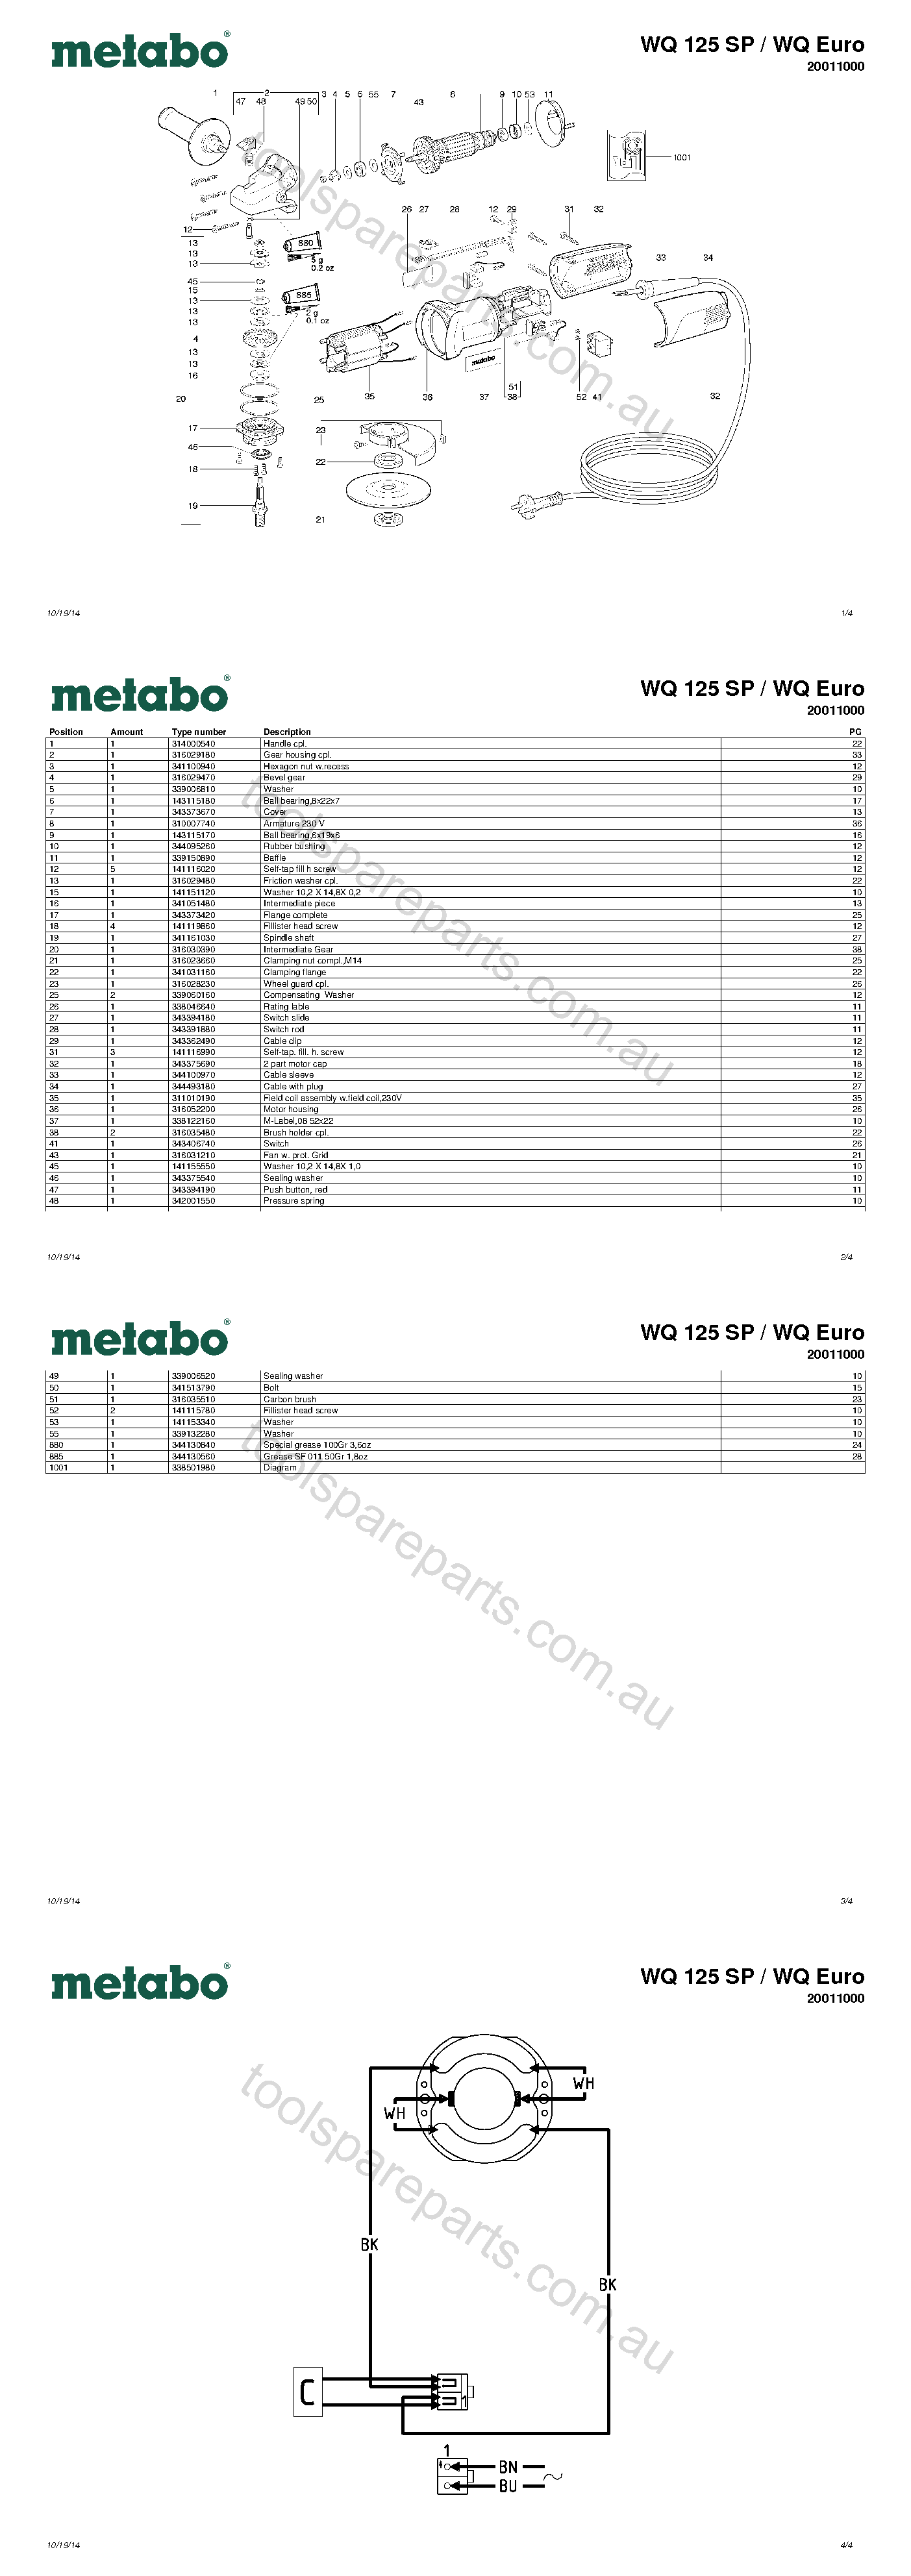 Metabo WQ 125 SP / WQ Euro 20011000  Diagram 1